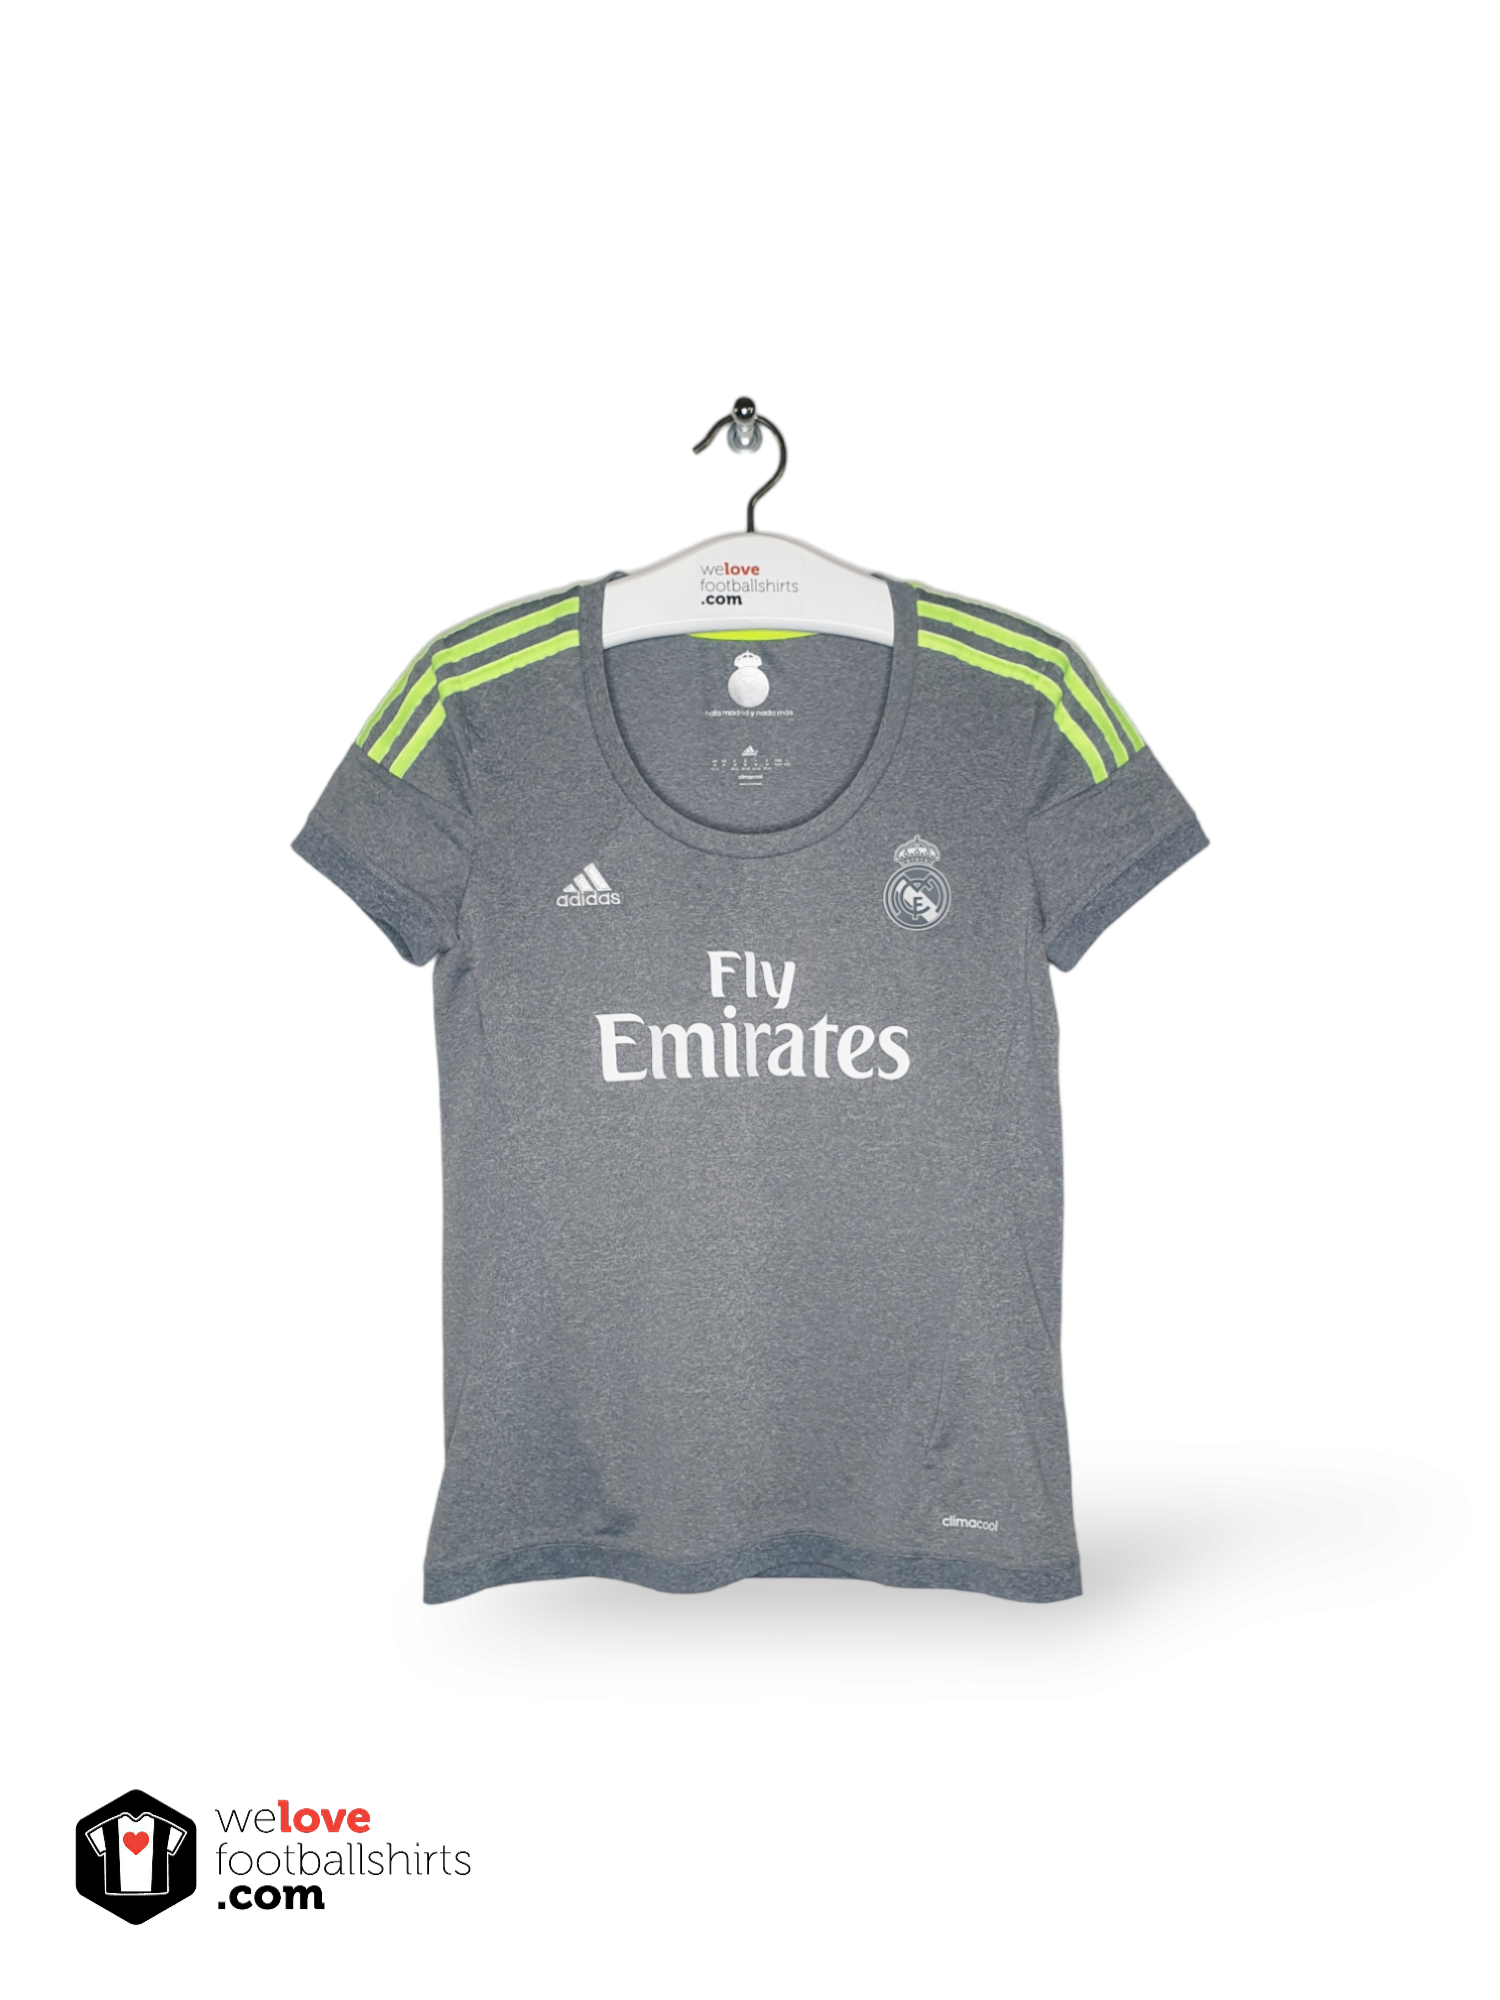 Gemoedsrust Land Oh jee Adidas dames voetbalshirt Real Madrid CF 2015/16 - Welovefootballshirts.com